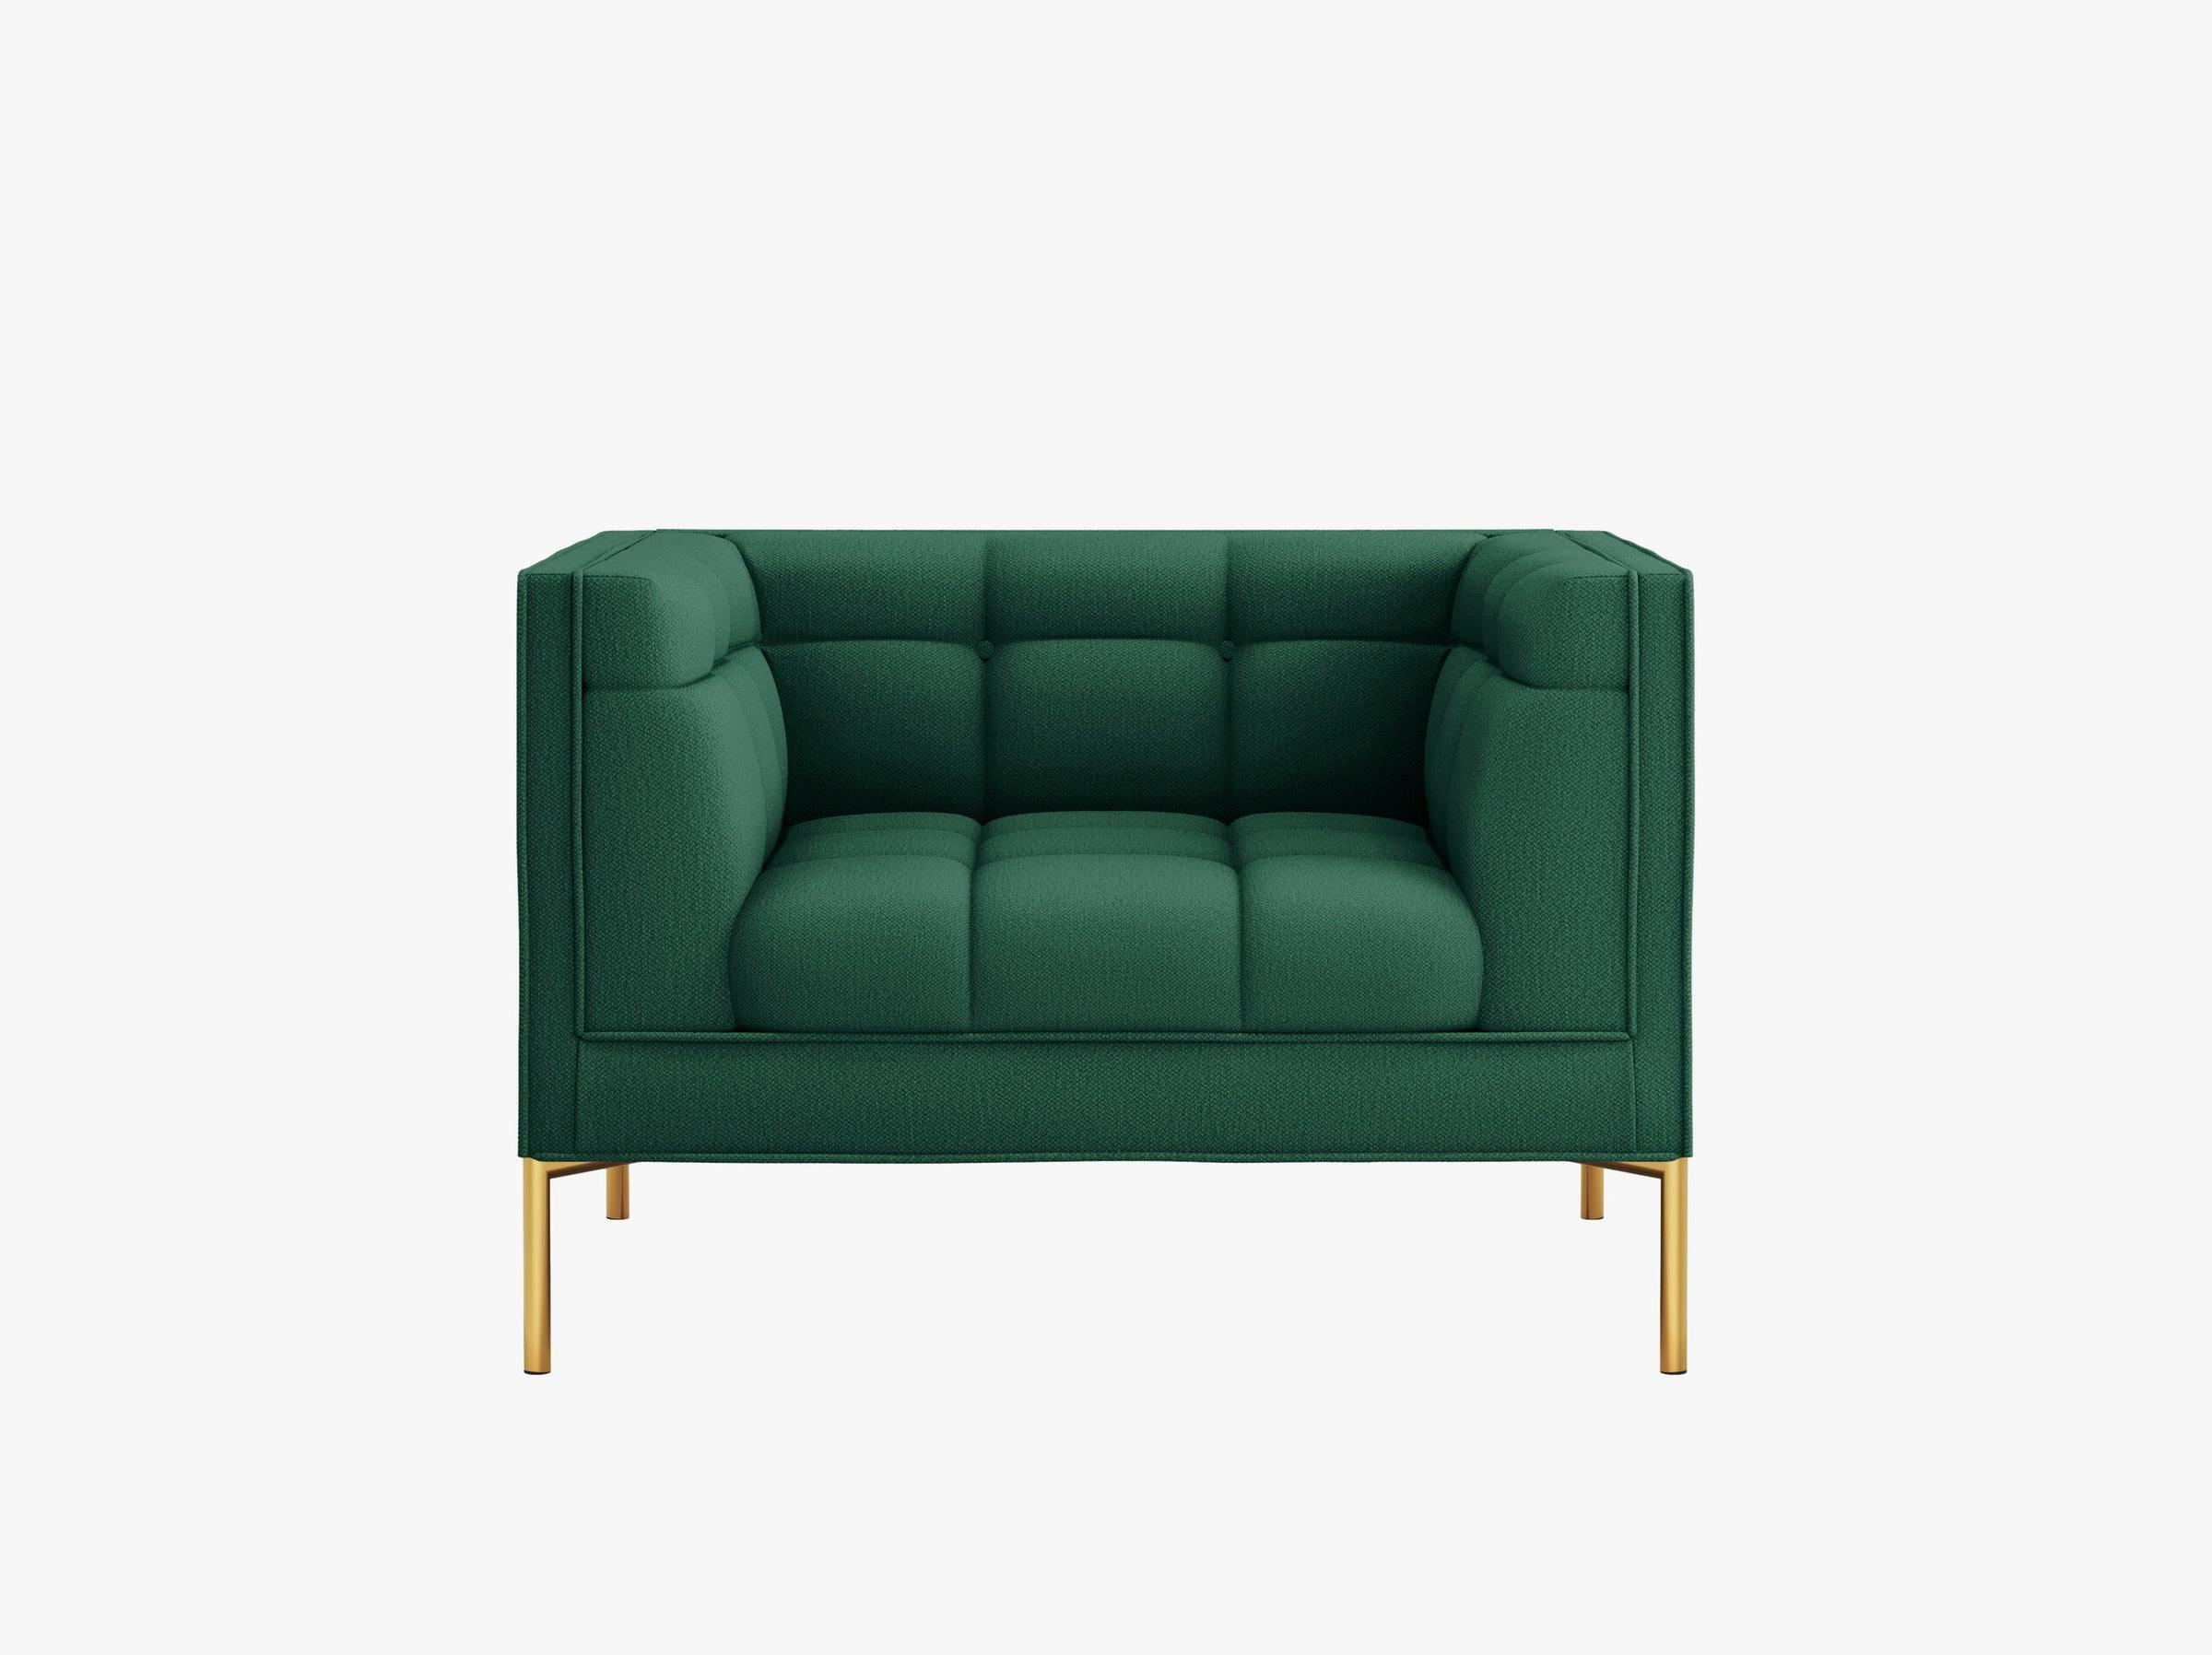 Karoo sofas strukturierter stoff grün